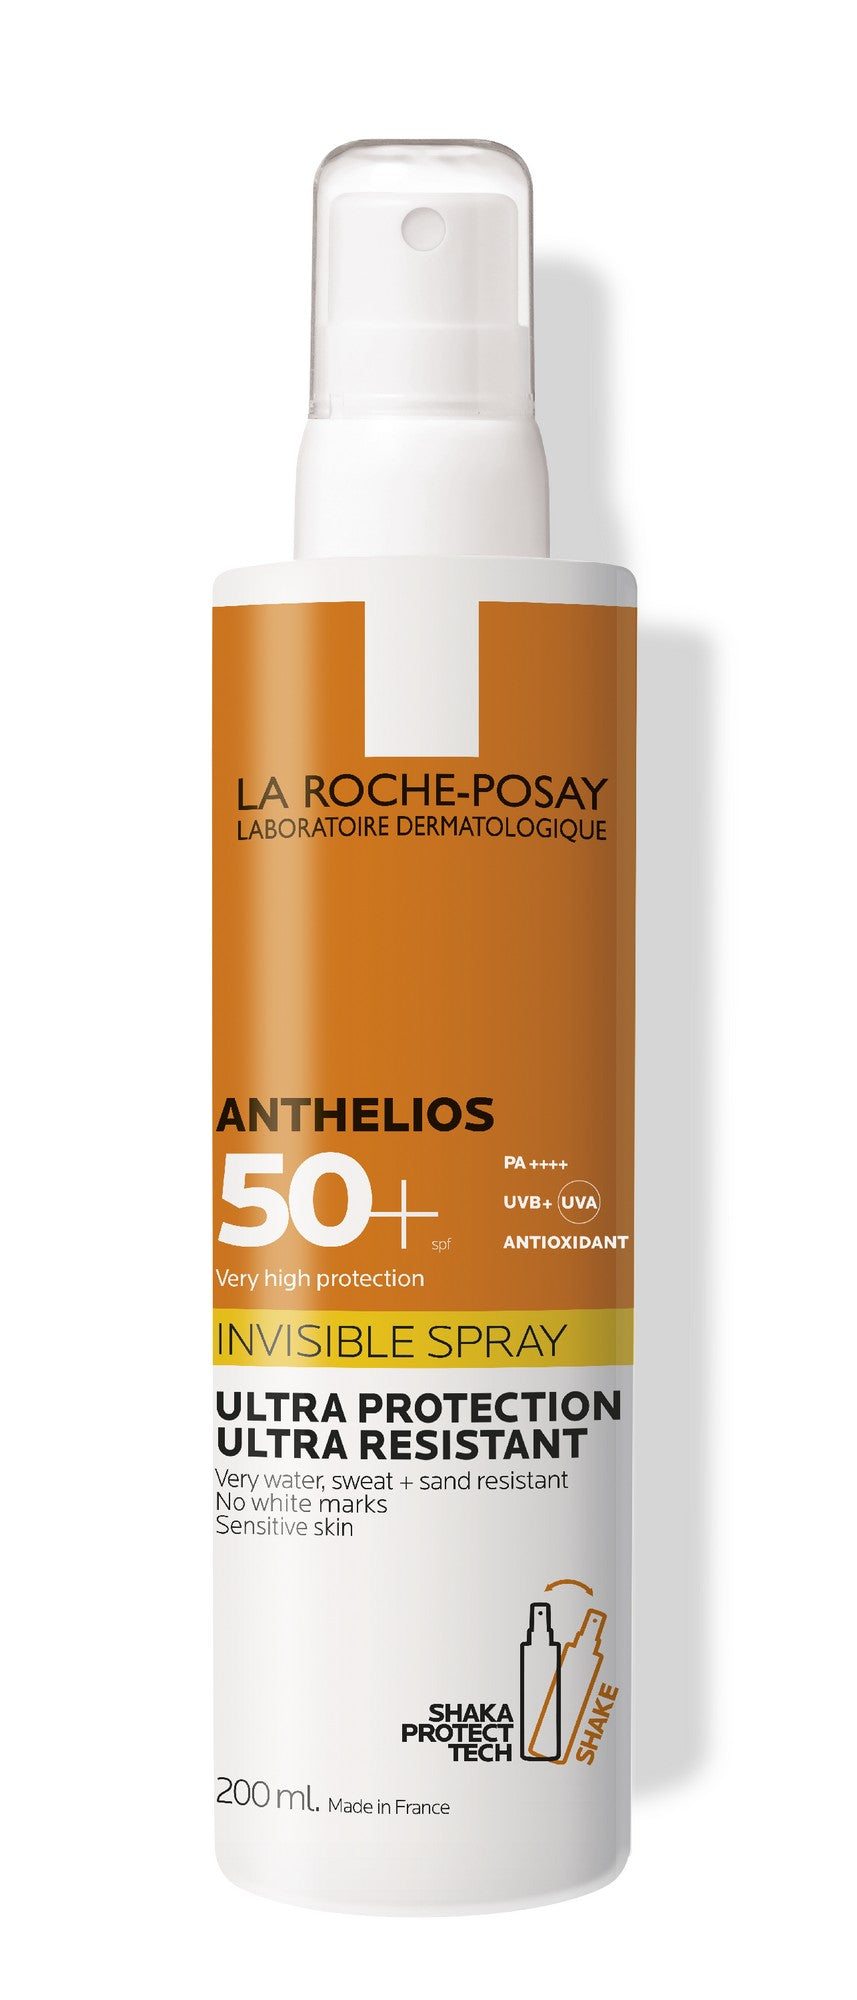 La Roche Posay Anthelios 50+ Invisible Spray 200ml